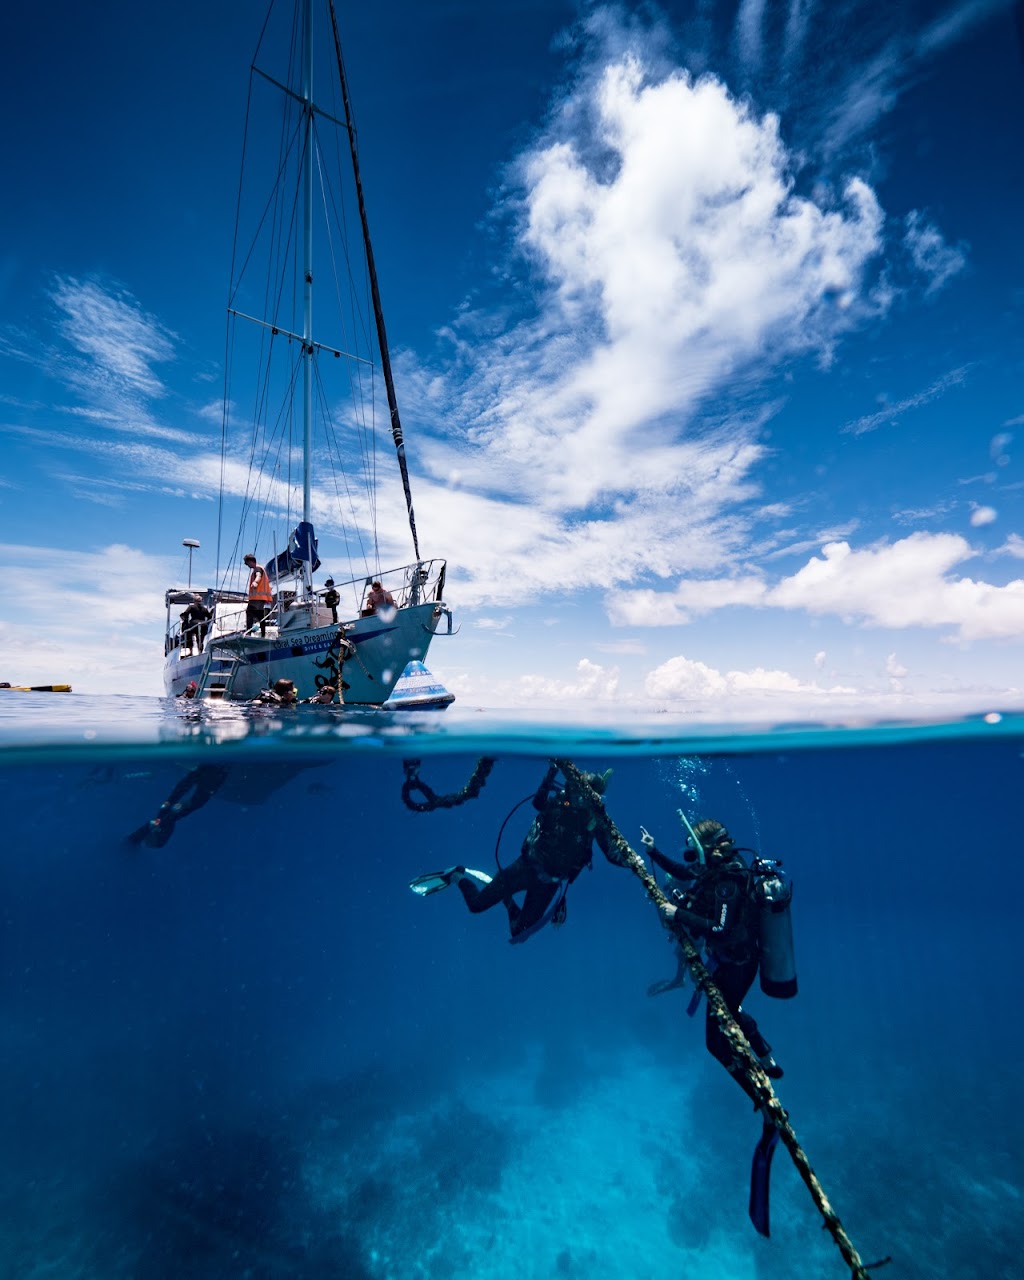 Coral Sea Dreaming Dive and Sail | Marlin Marina, Finger, A02, Cairns City QLD 4870, Australia | Phone: 0474 727 777